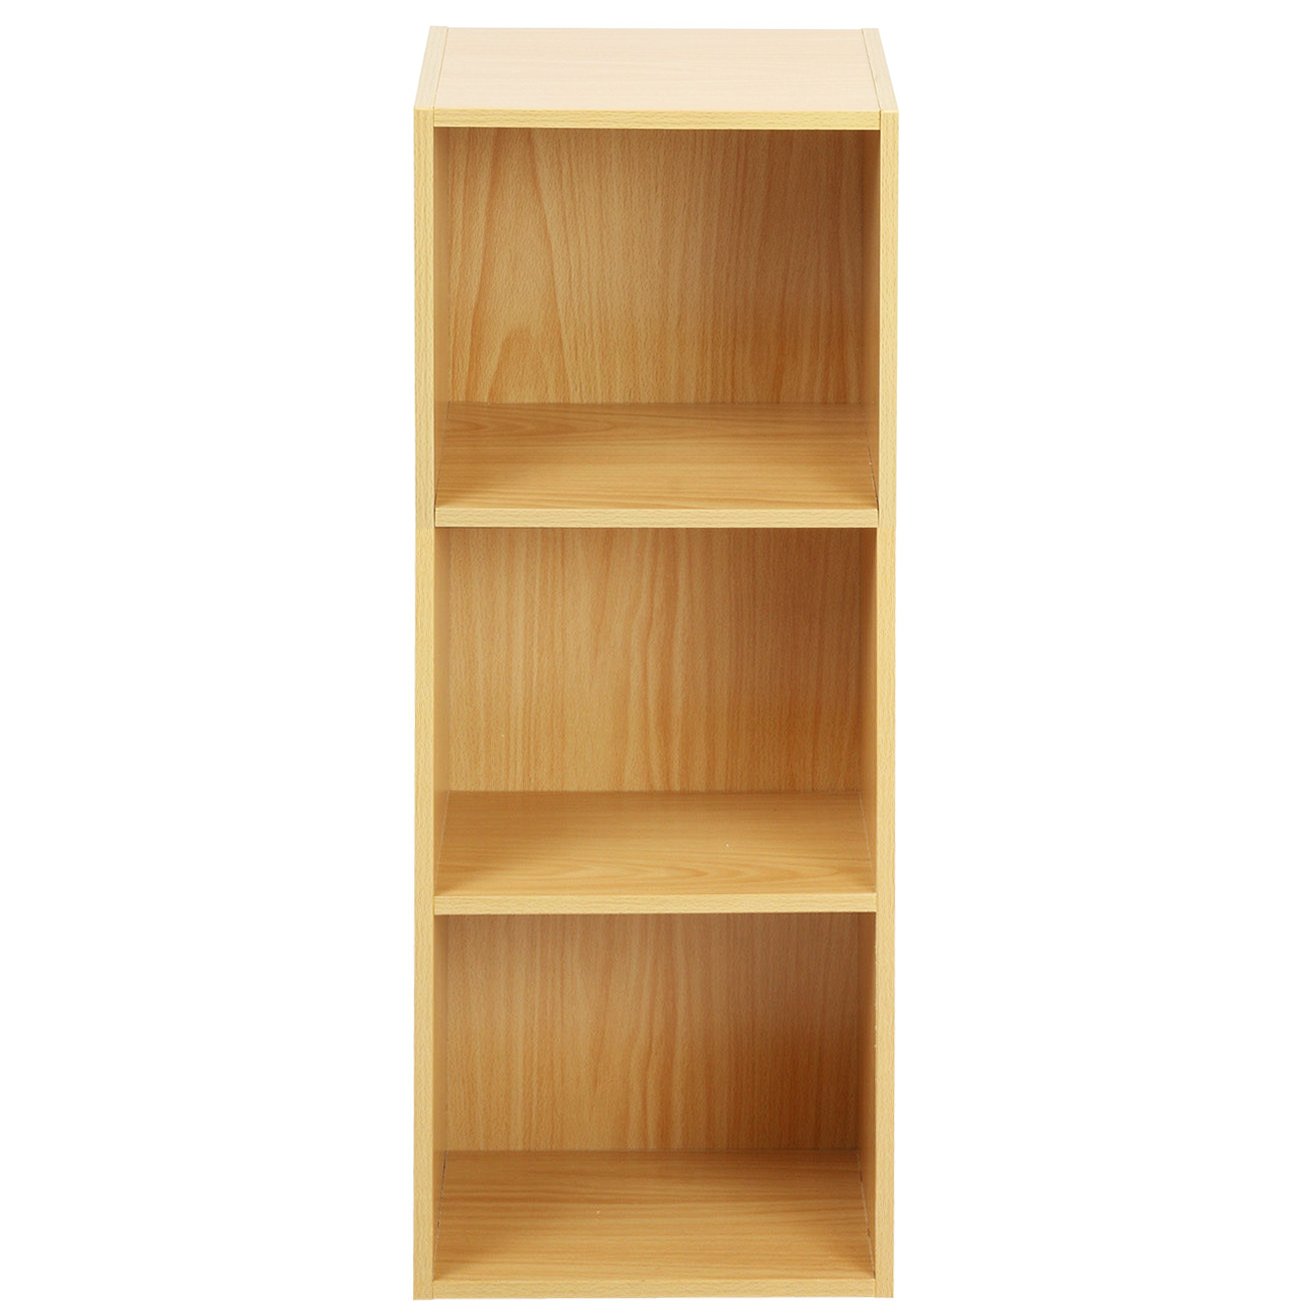 3 or 4 tier wooden storage shelf library presentation Cube 2 